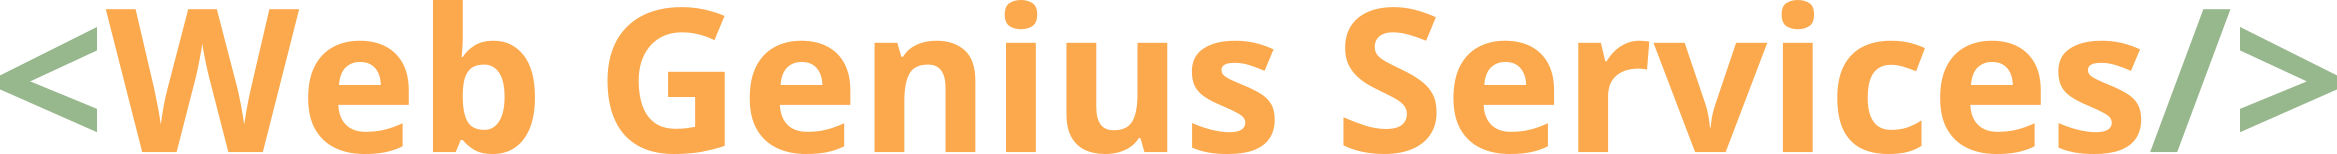 Web Genius Services logo